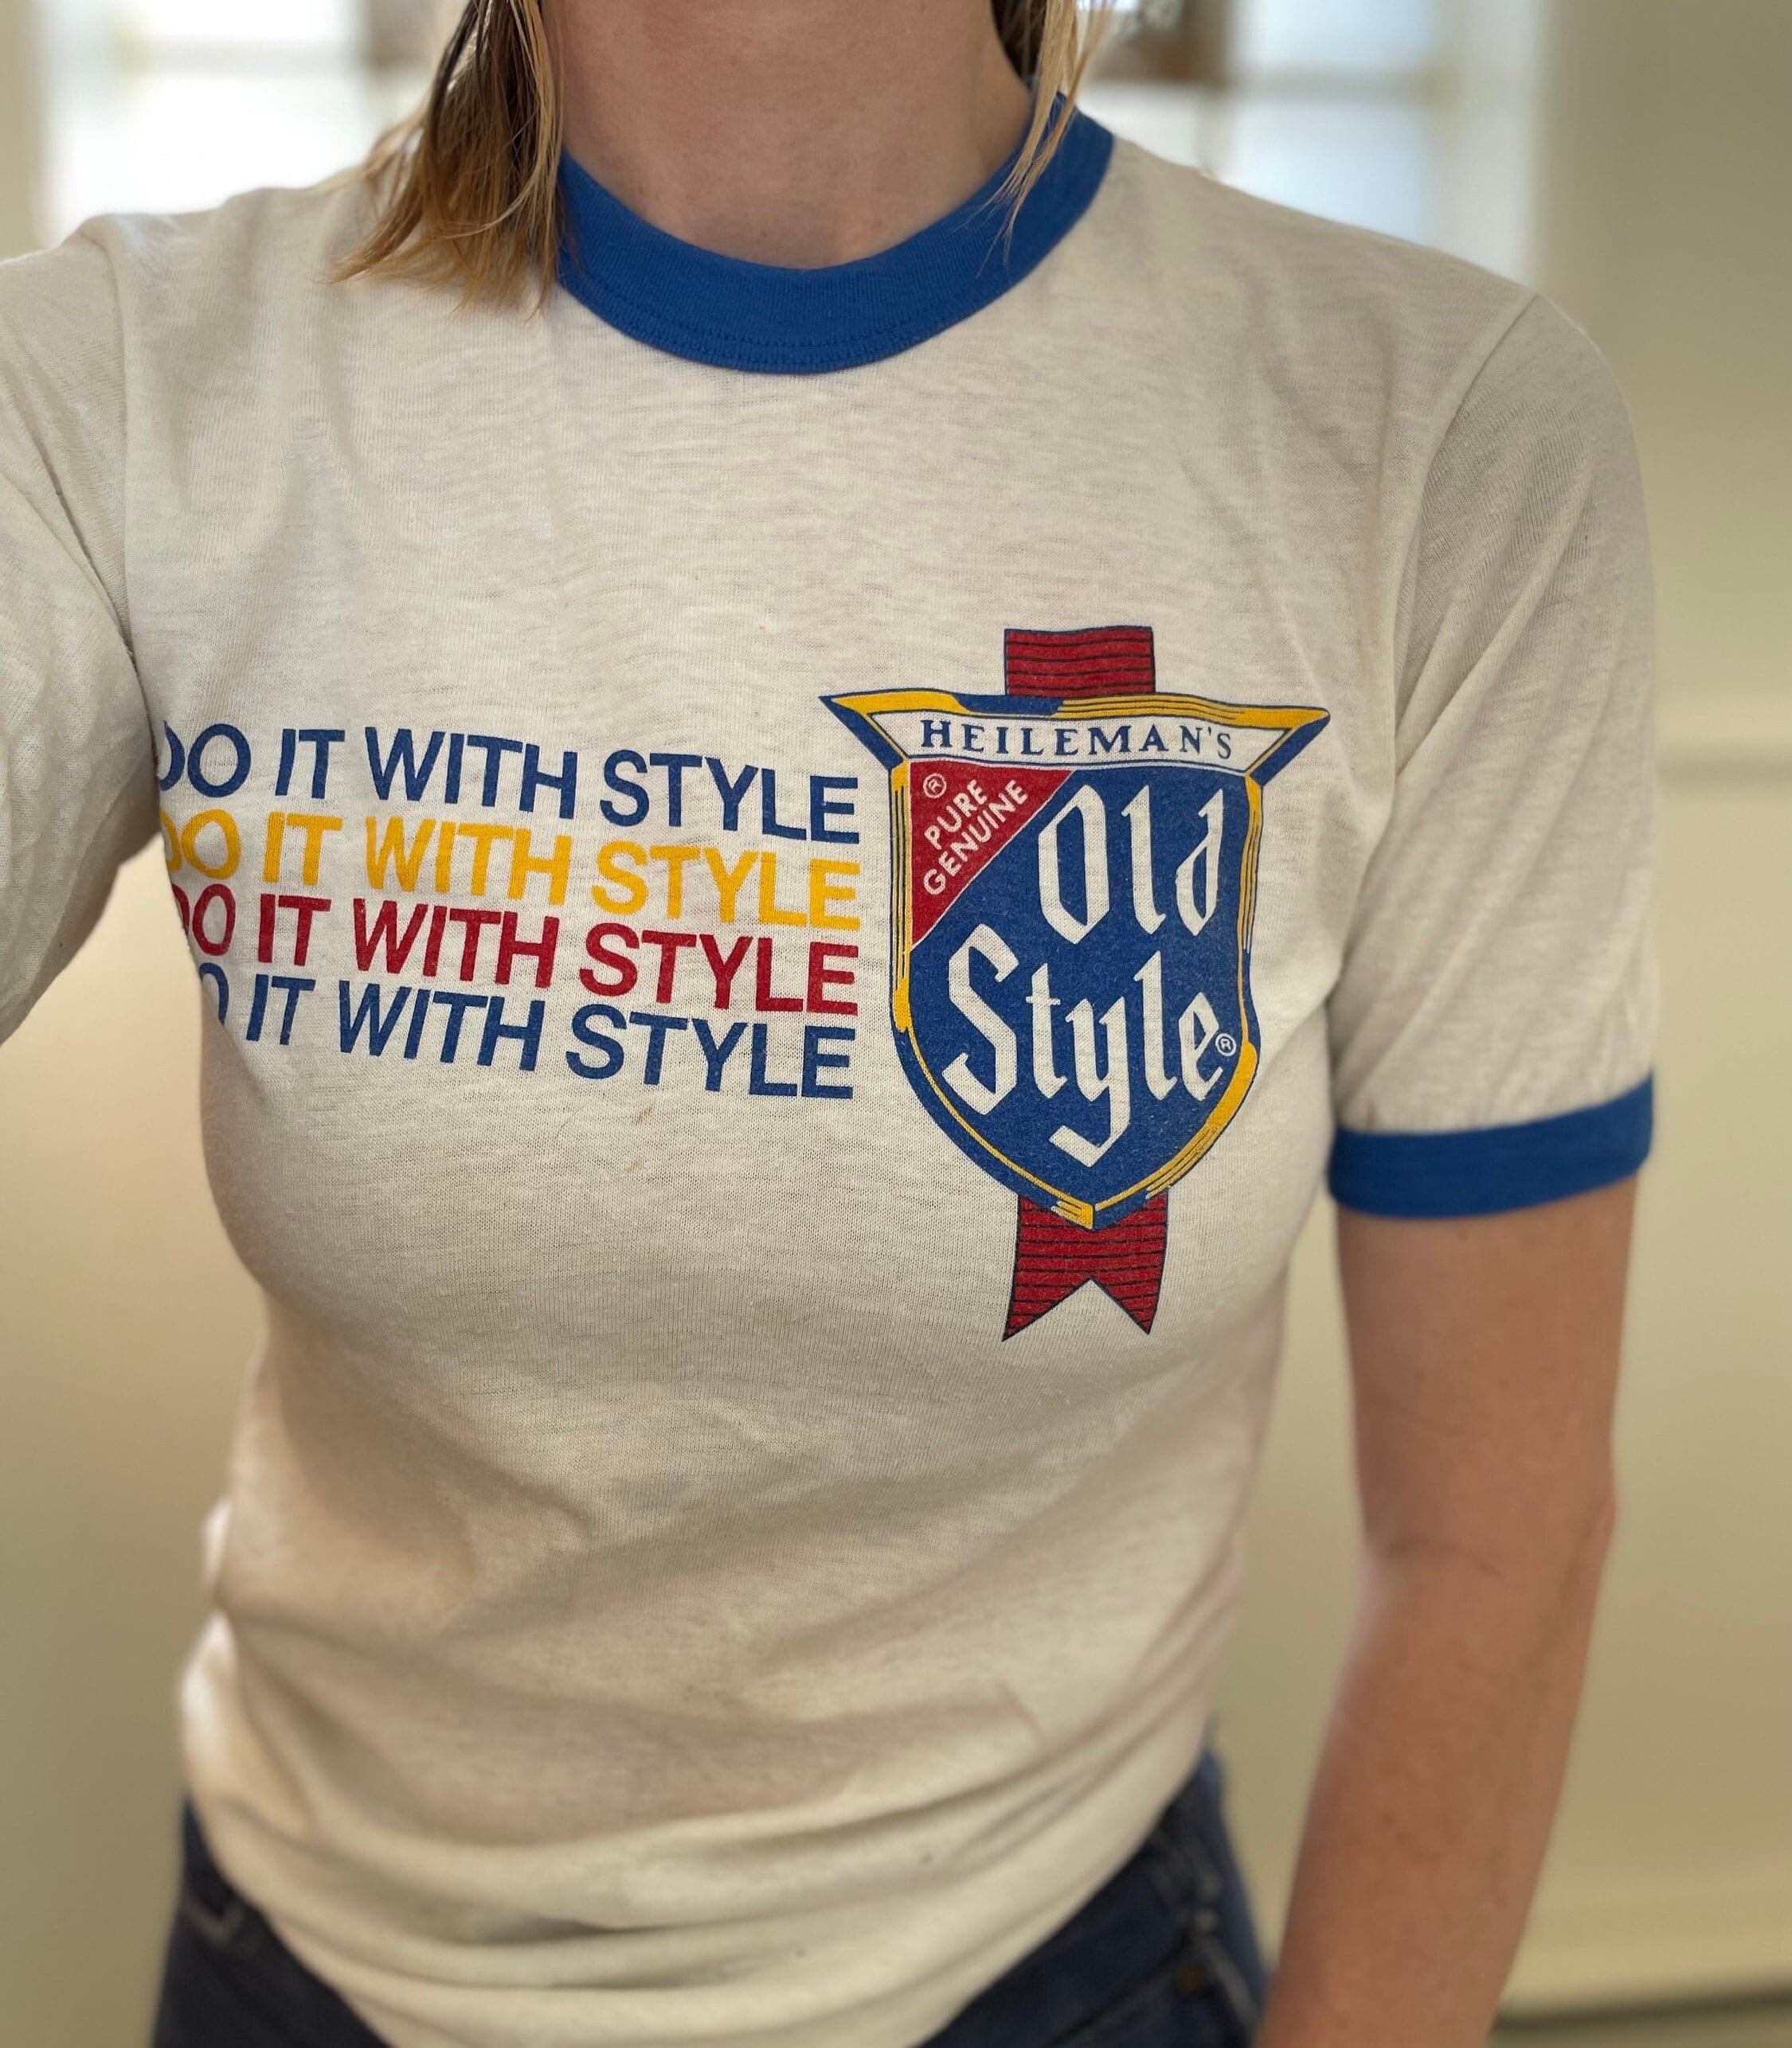 No Guts, No Glory T-Shirt - Hockey Shirt – Old Style Beer Store